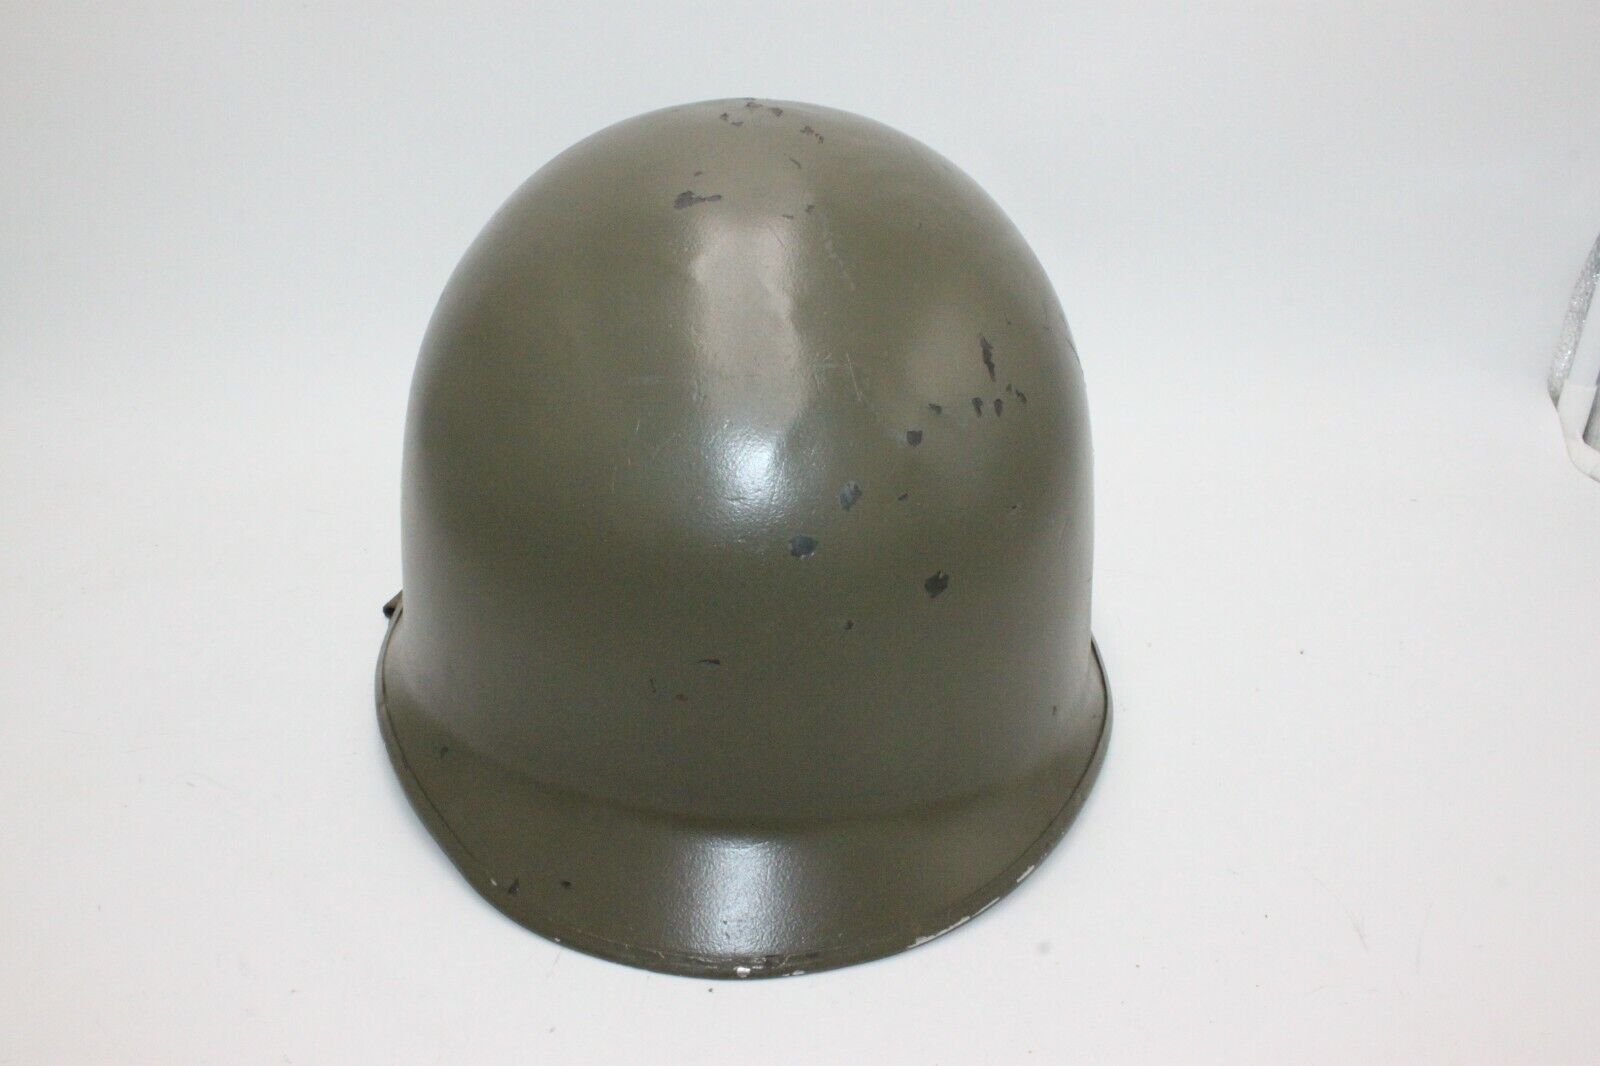 Austrian Olive Drab M1 Steel Helmet Military Surplus Army Tactical Cold War Surp